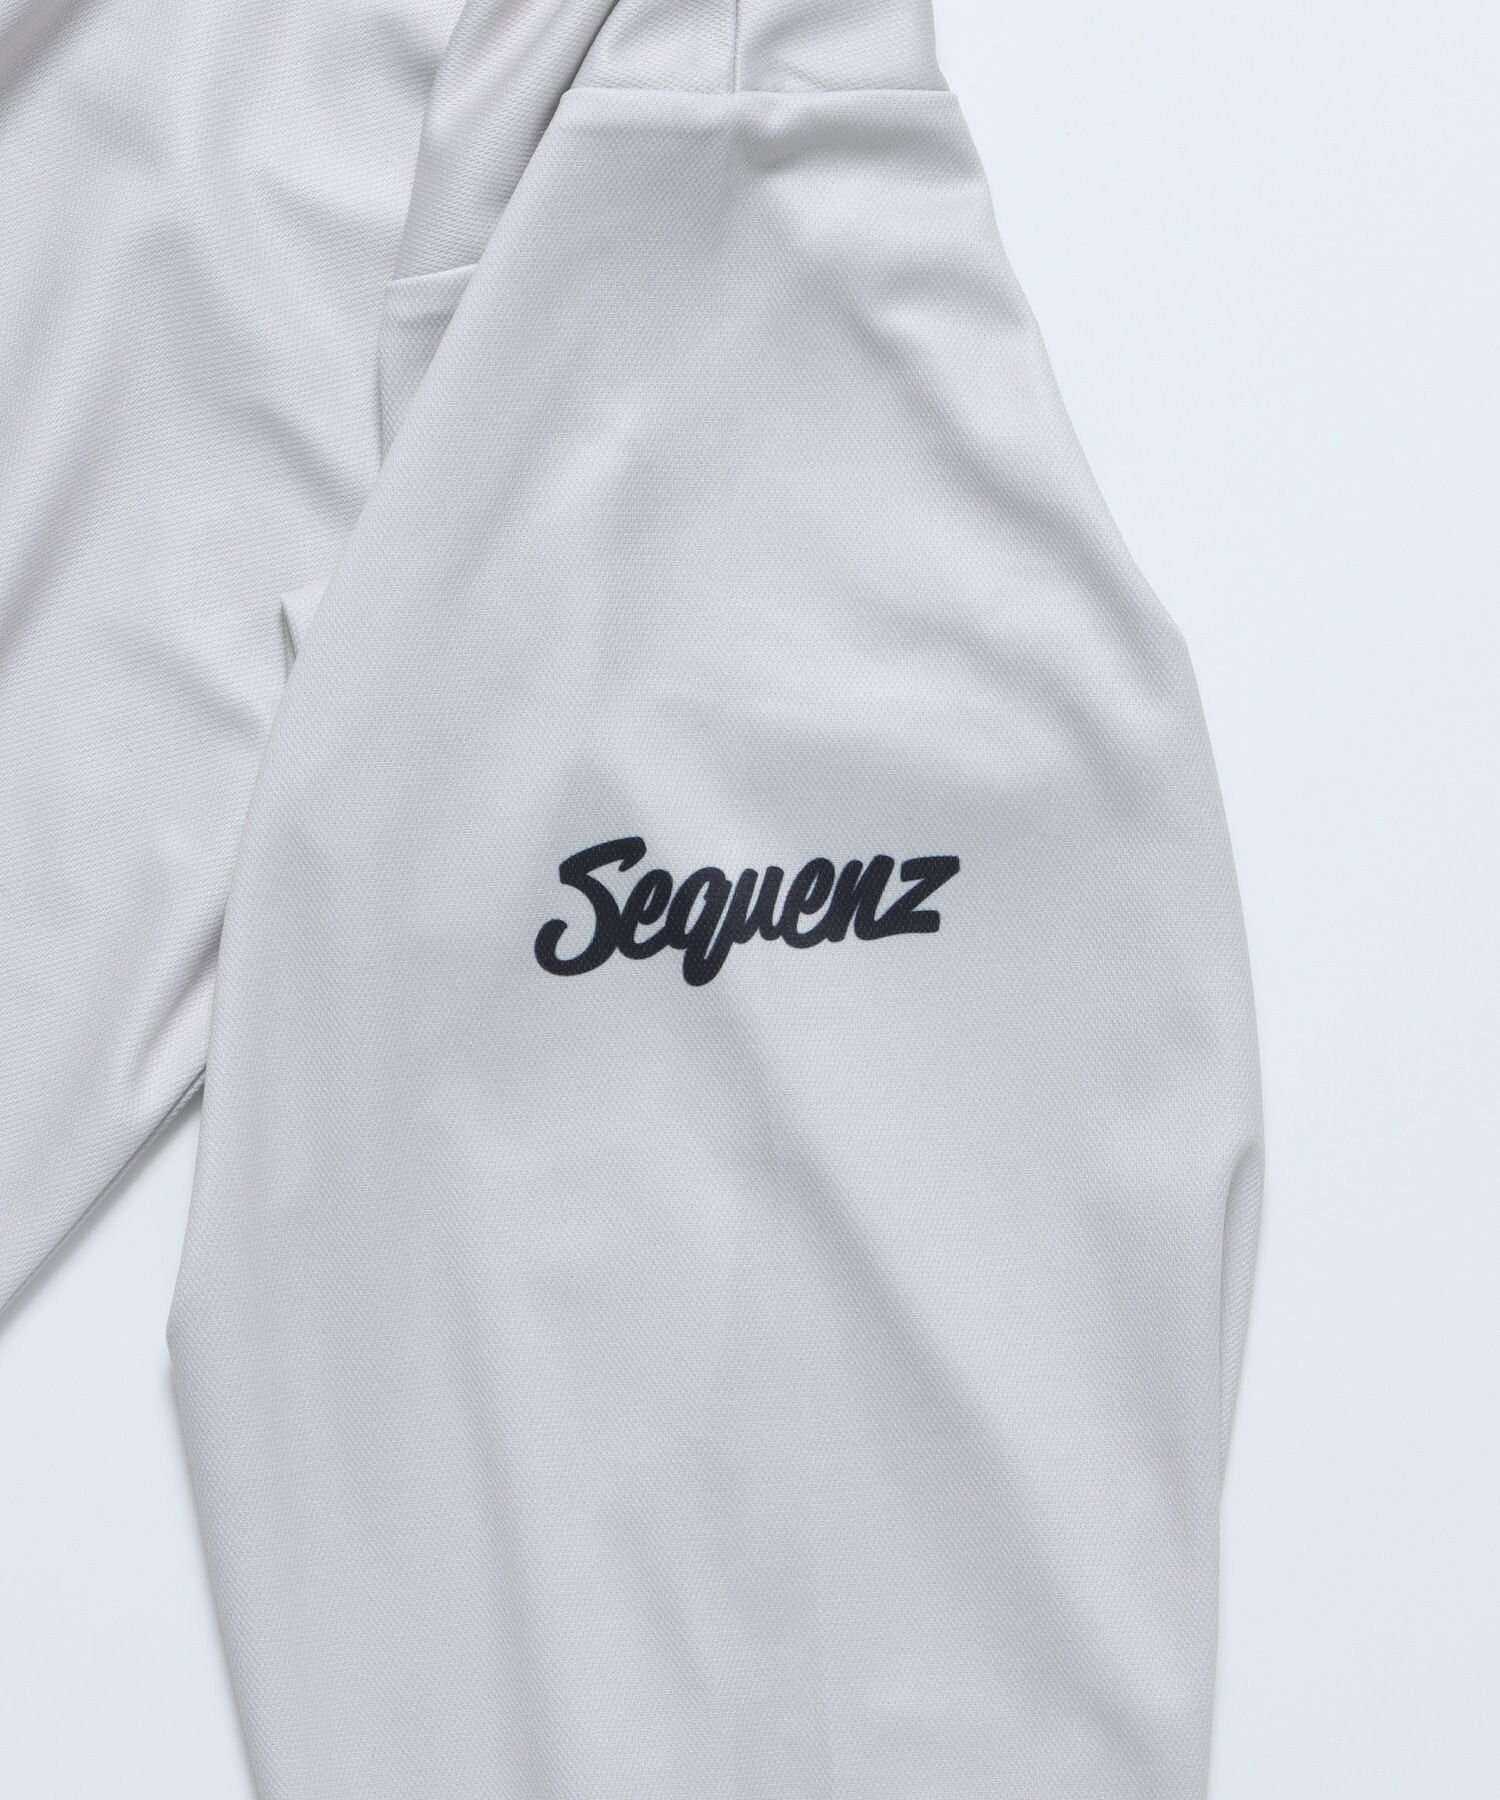 【SEQUENZ】 SQNZ L/S GAME SHIRT / ゲームシャツ ストライプ ビックシルエット ルーズフィット ブランドロゴ プルオーバー Vネック